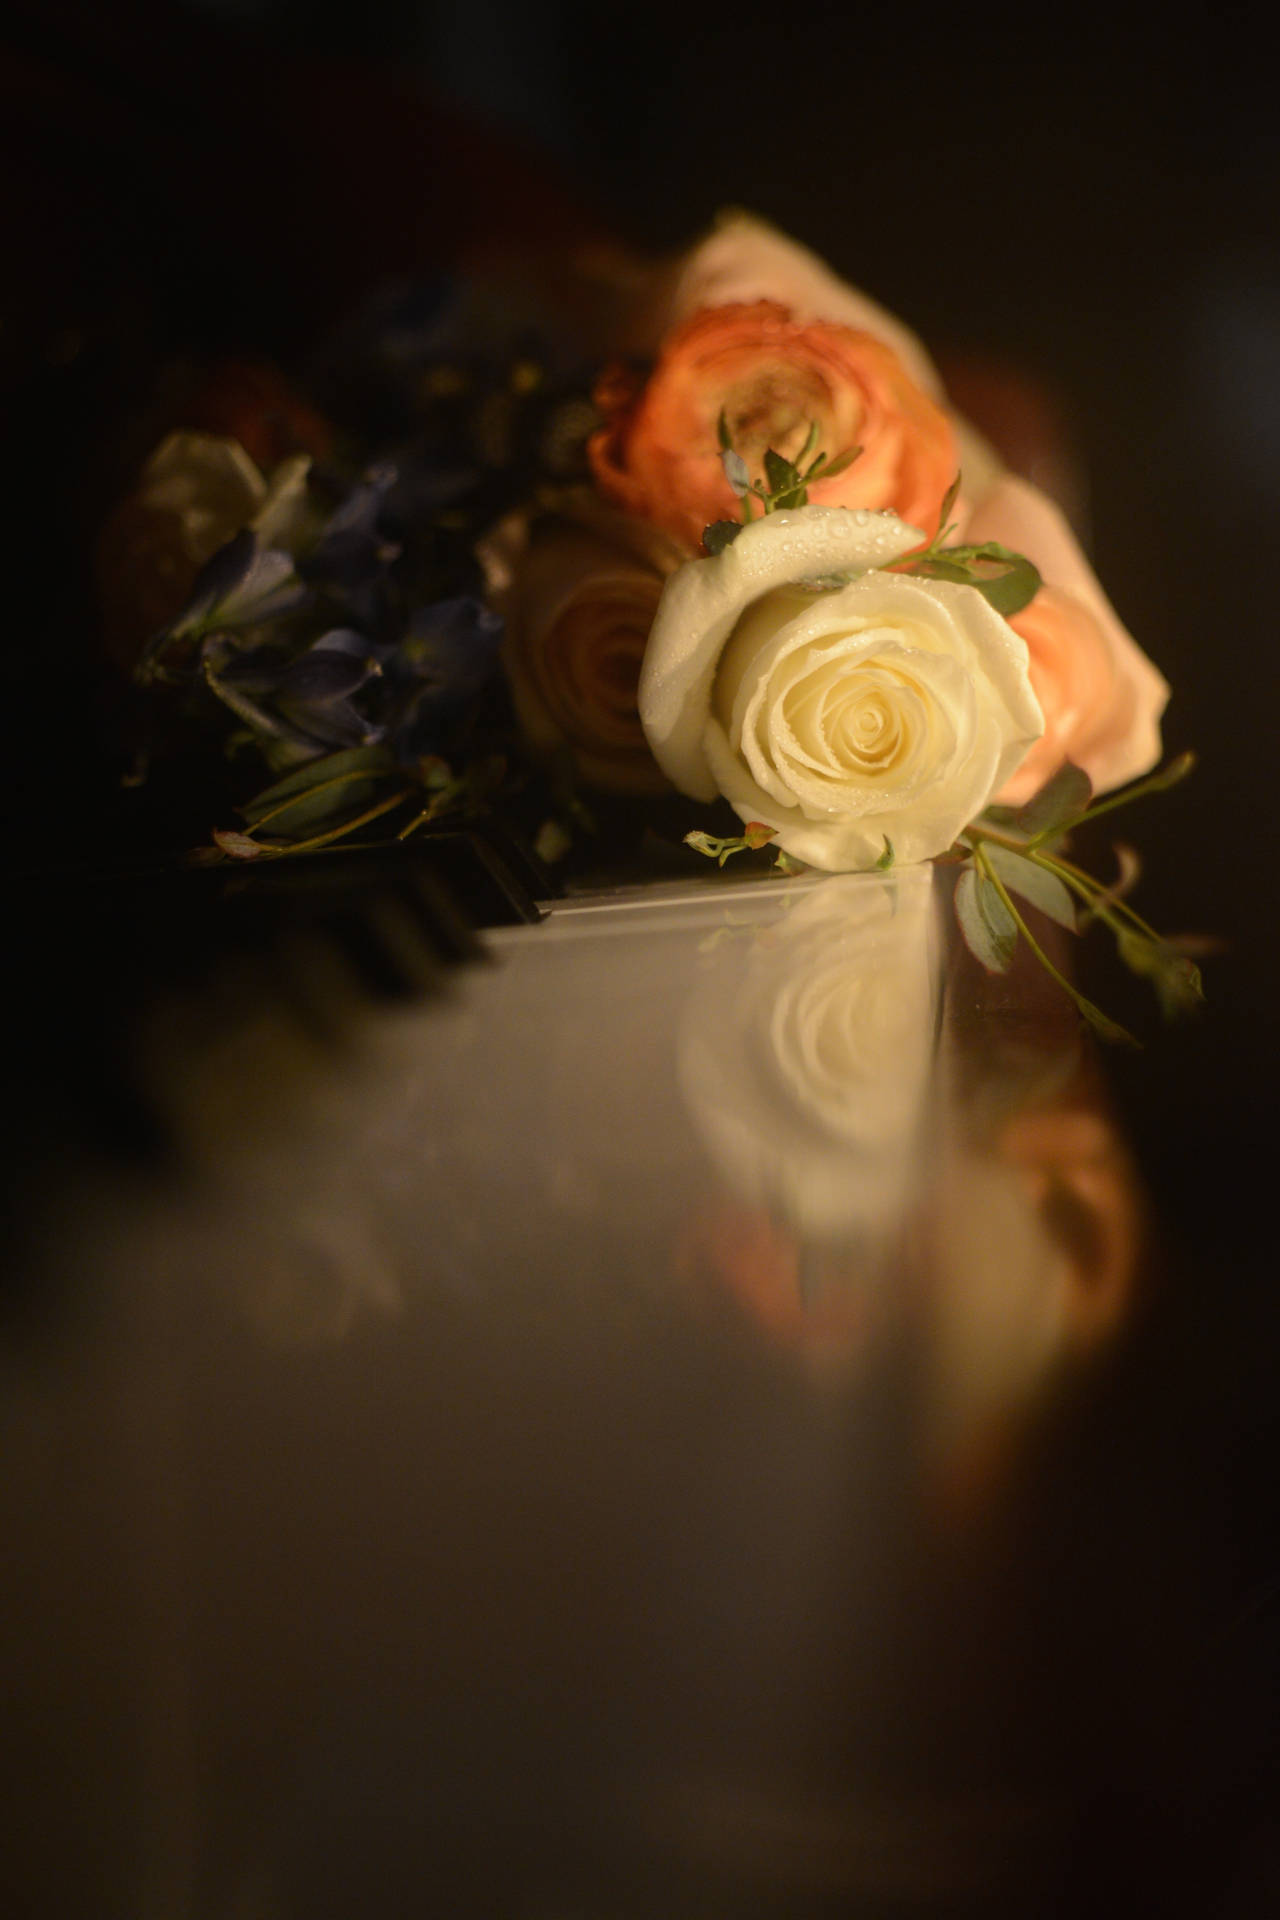 Romantic Roses On Piano Keys Wallpaper